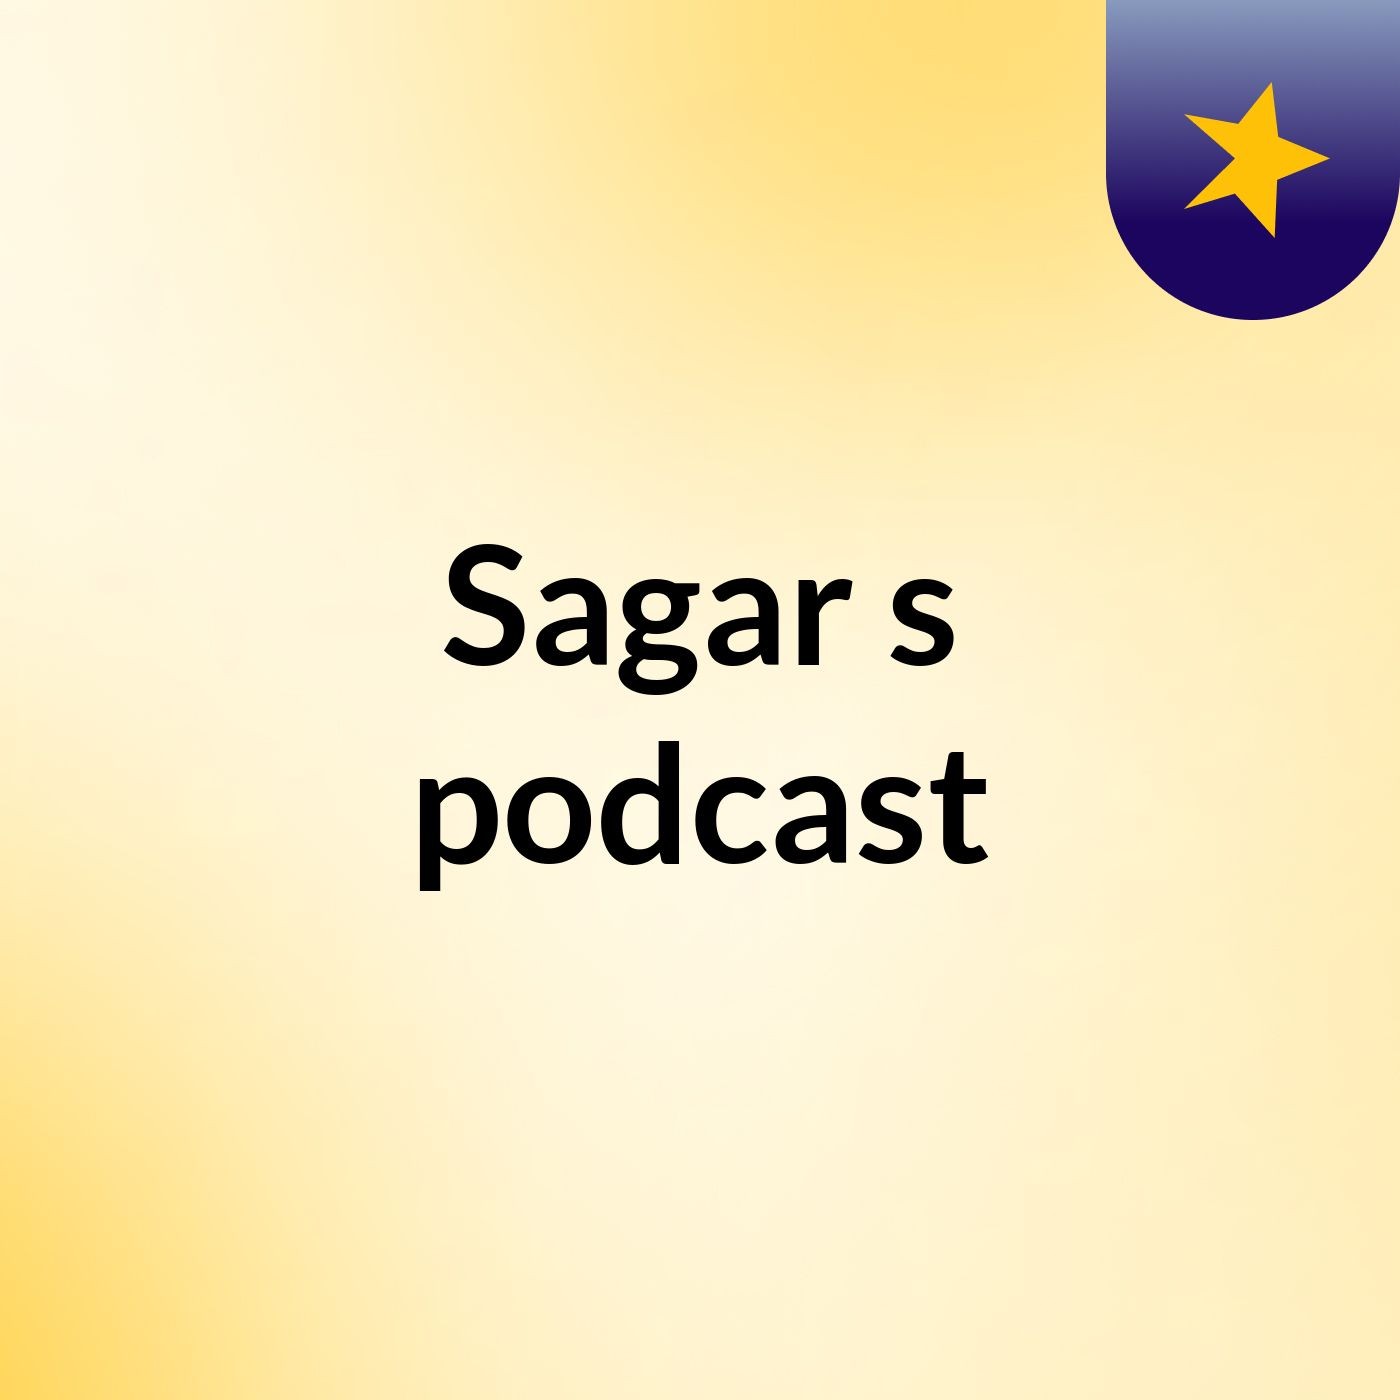 Episode 4 - Sagar's podcast